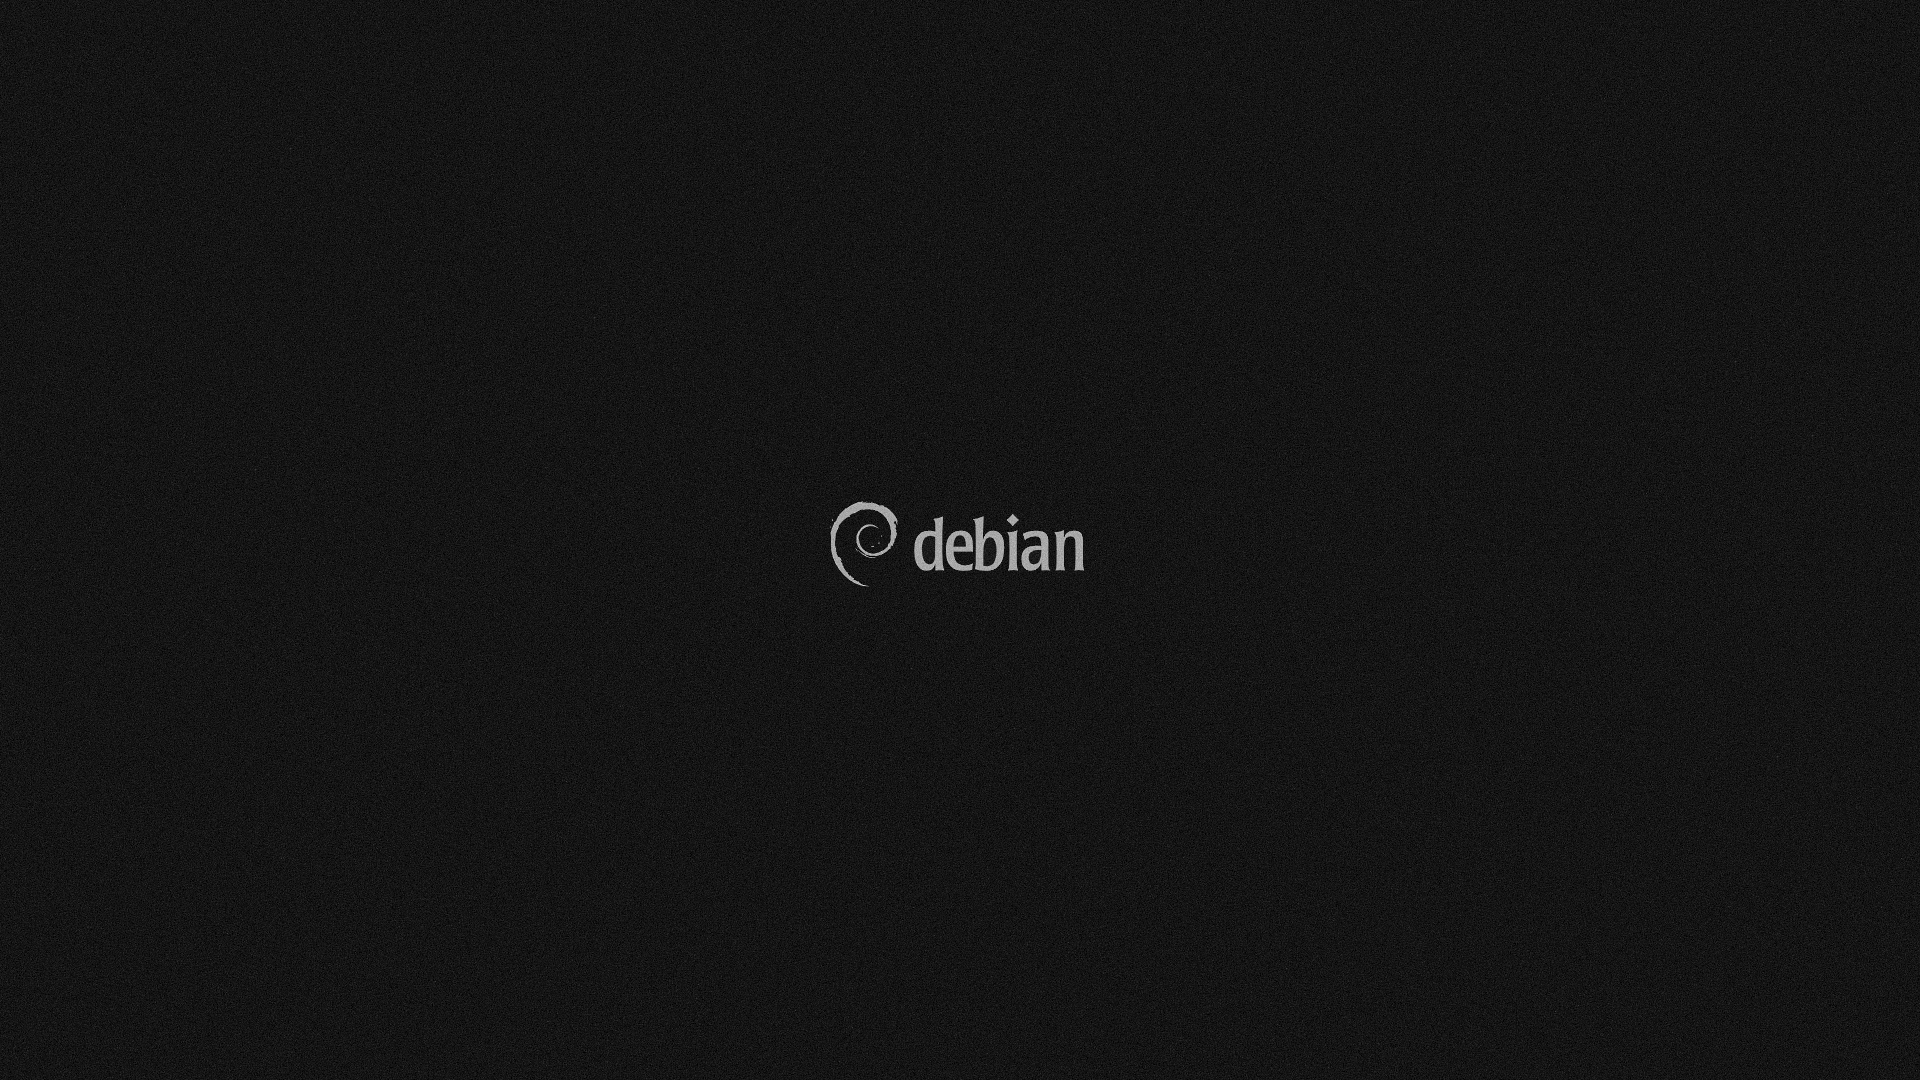 General 1920x1080 Linux Debian minimalism monochrome computer dark digital art simple background